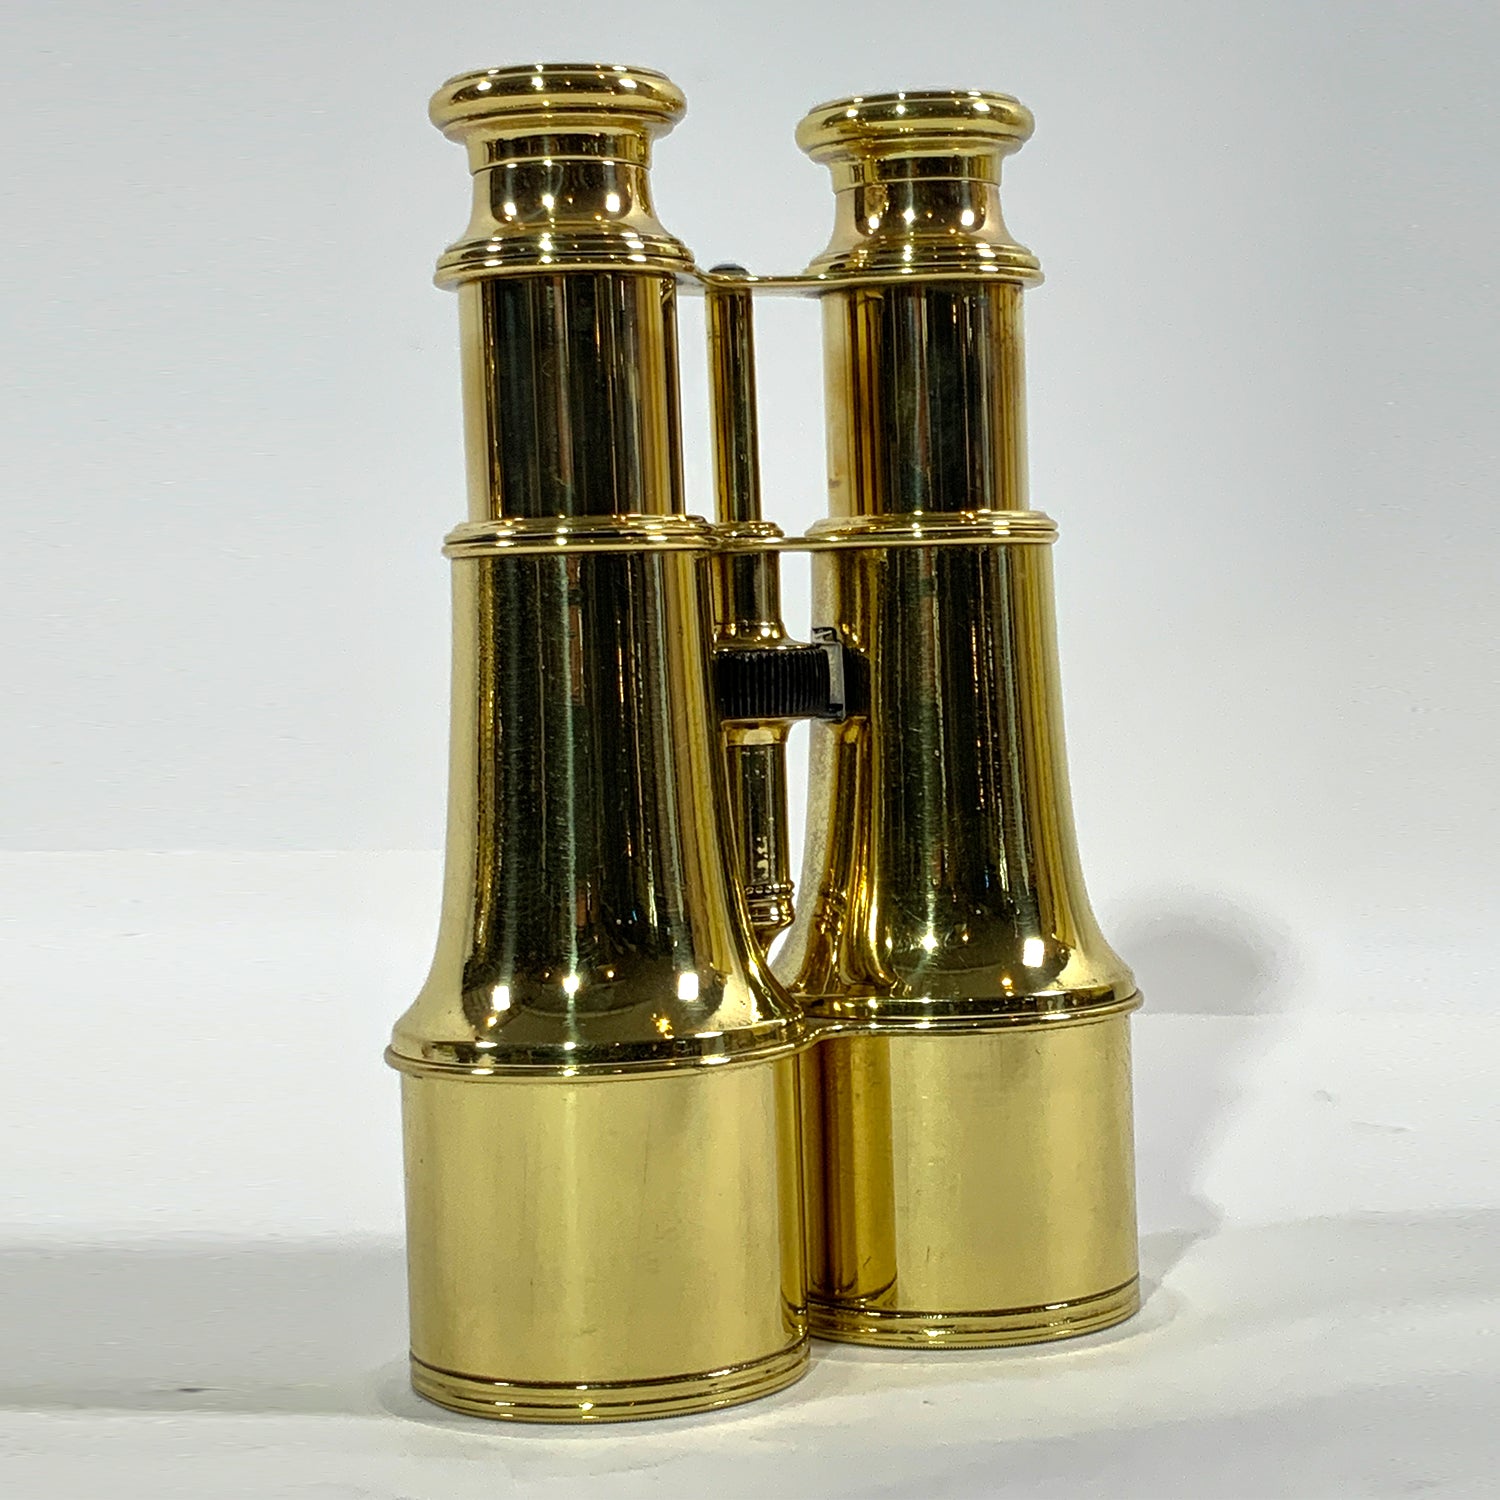 Solid Brass Yachting Binoculars Circa 1890 - Lannan Gallery